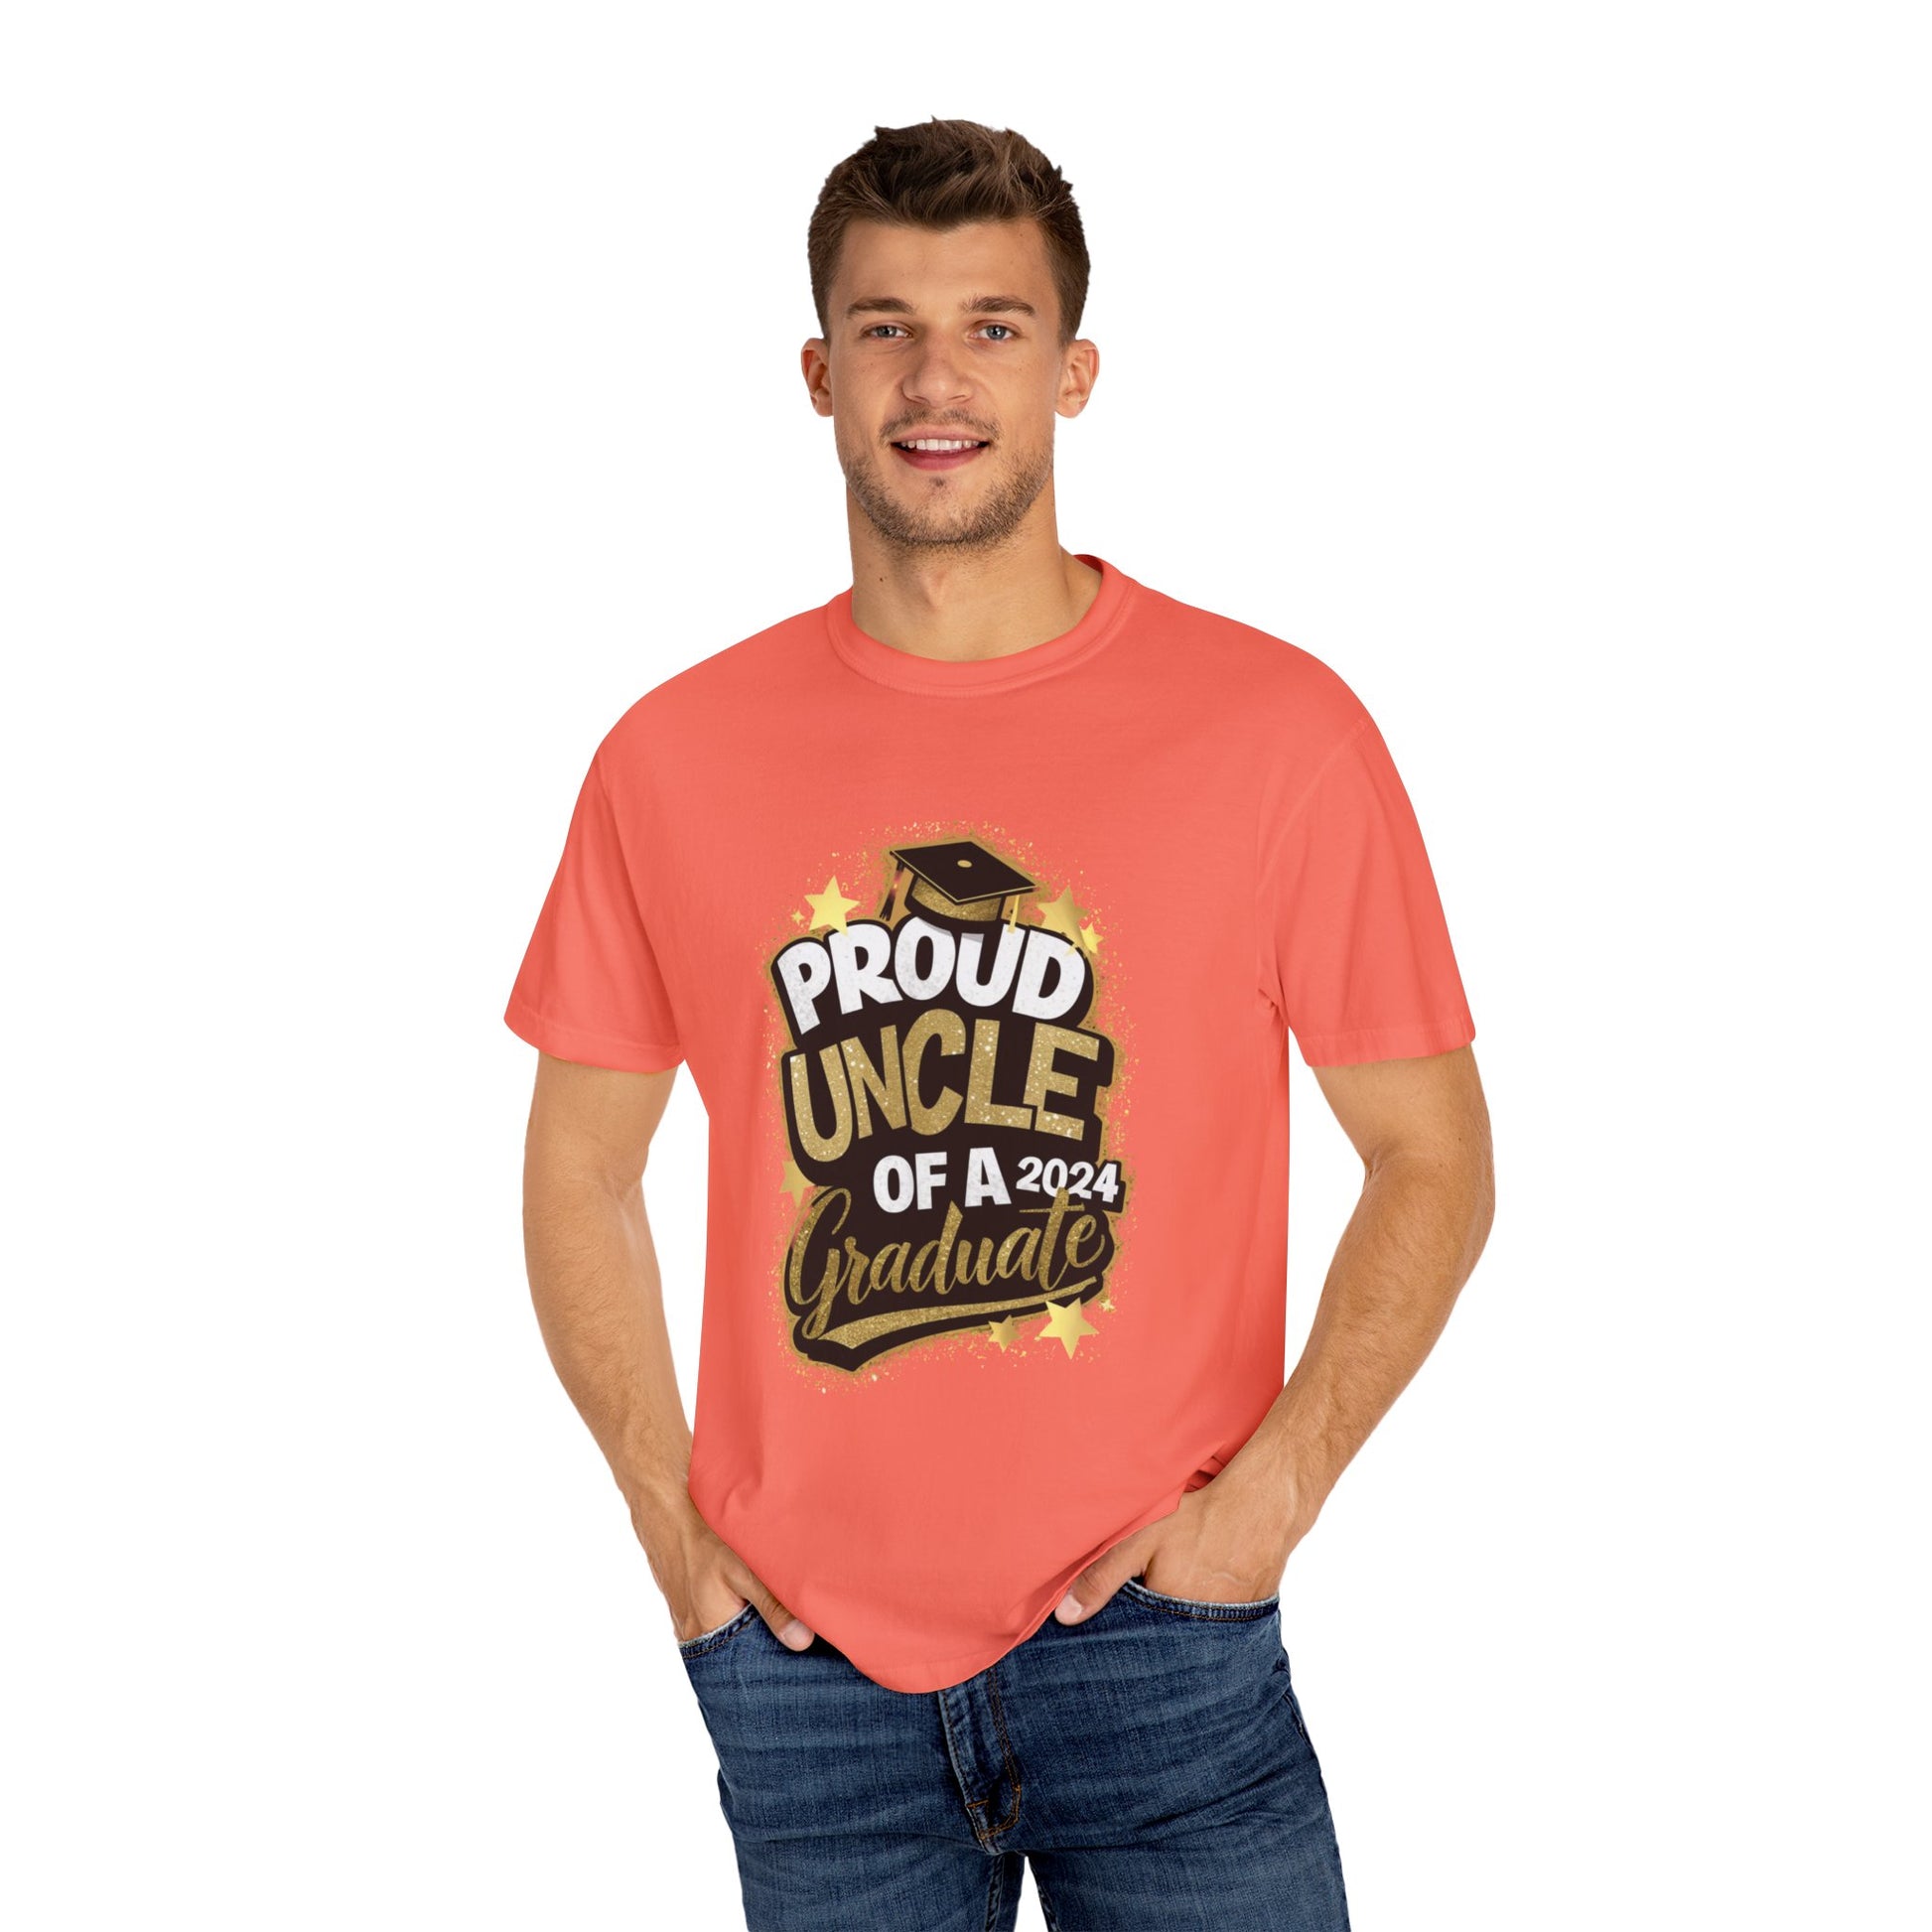 Proud Uncle of a 2024 Graduate Unisex Garment-dyed T-shirt Cotton Funny Humorous Graphic Soft Premium Unisex Men Women Bright Salmon T-shirt Birthday Gift-33